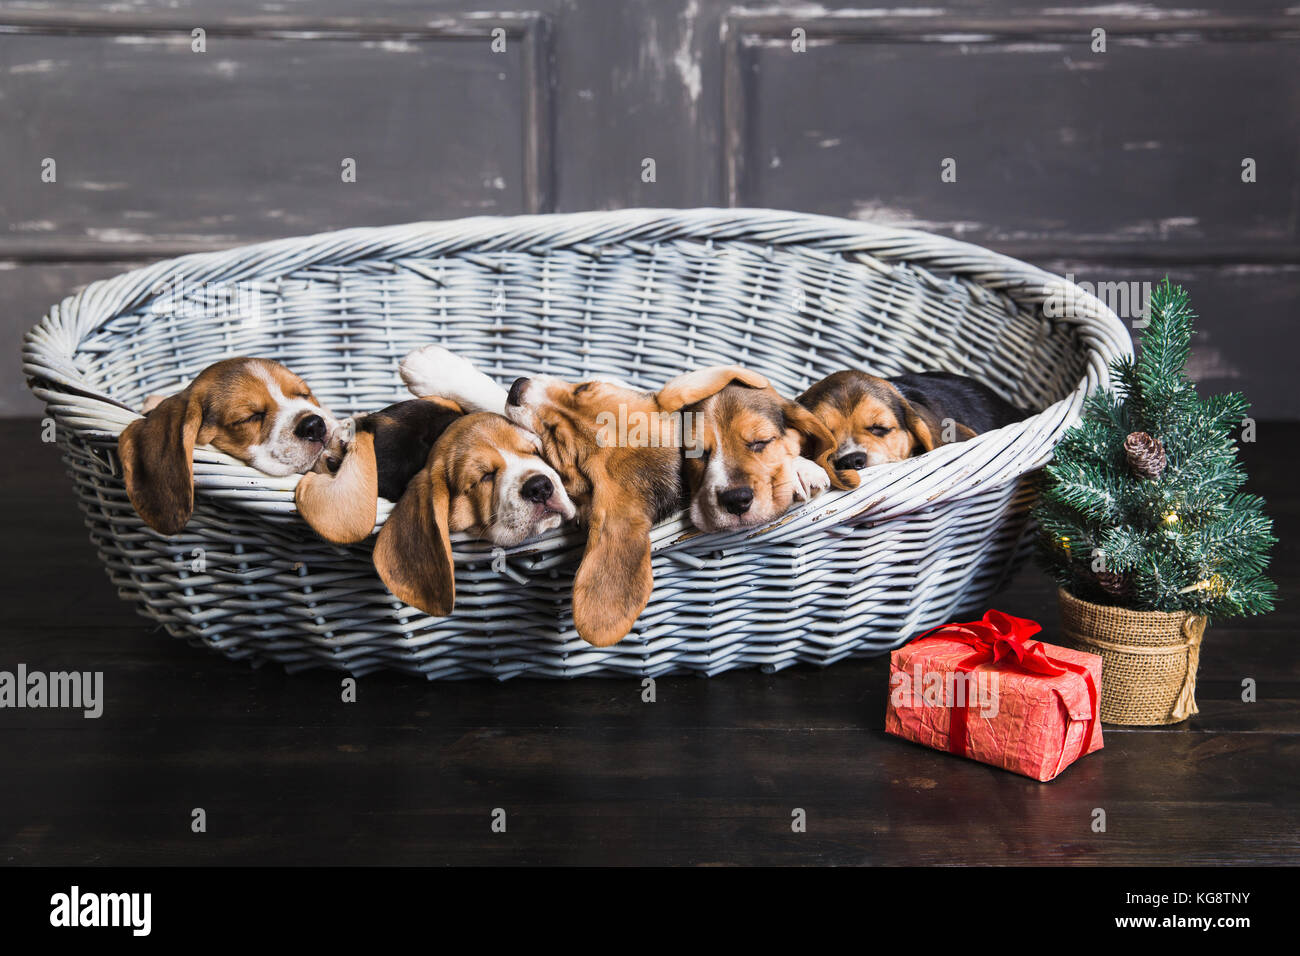 https://c8.alamy.com/comp/KG8TNY/six-beagle-puppies-sleeping-in-basket-young-beagle-puppy-gift-box-KG8TNY.jpg